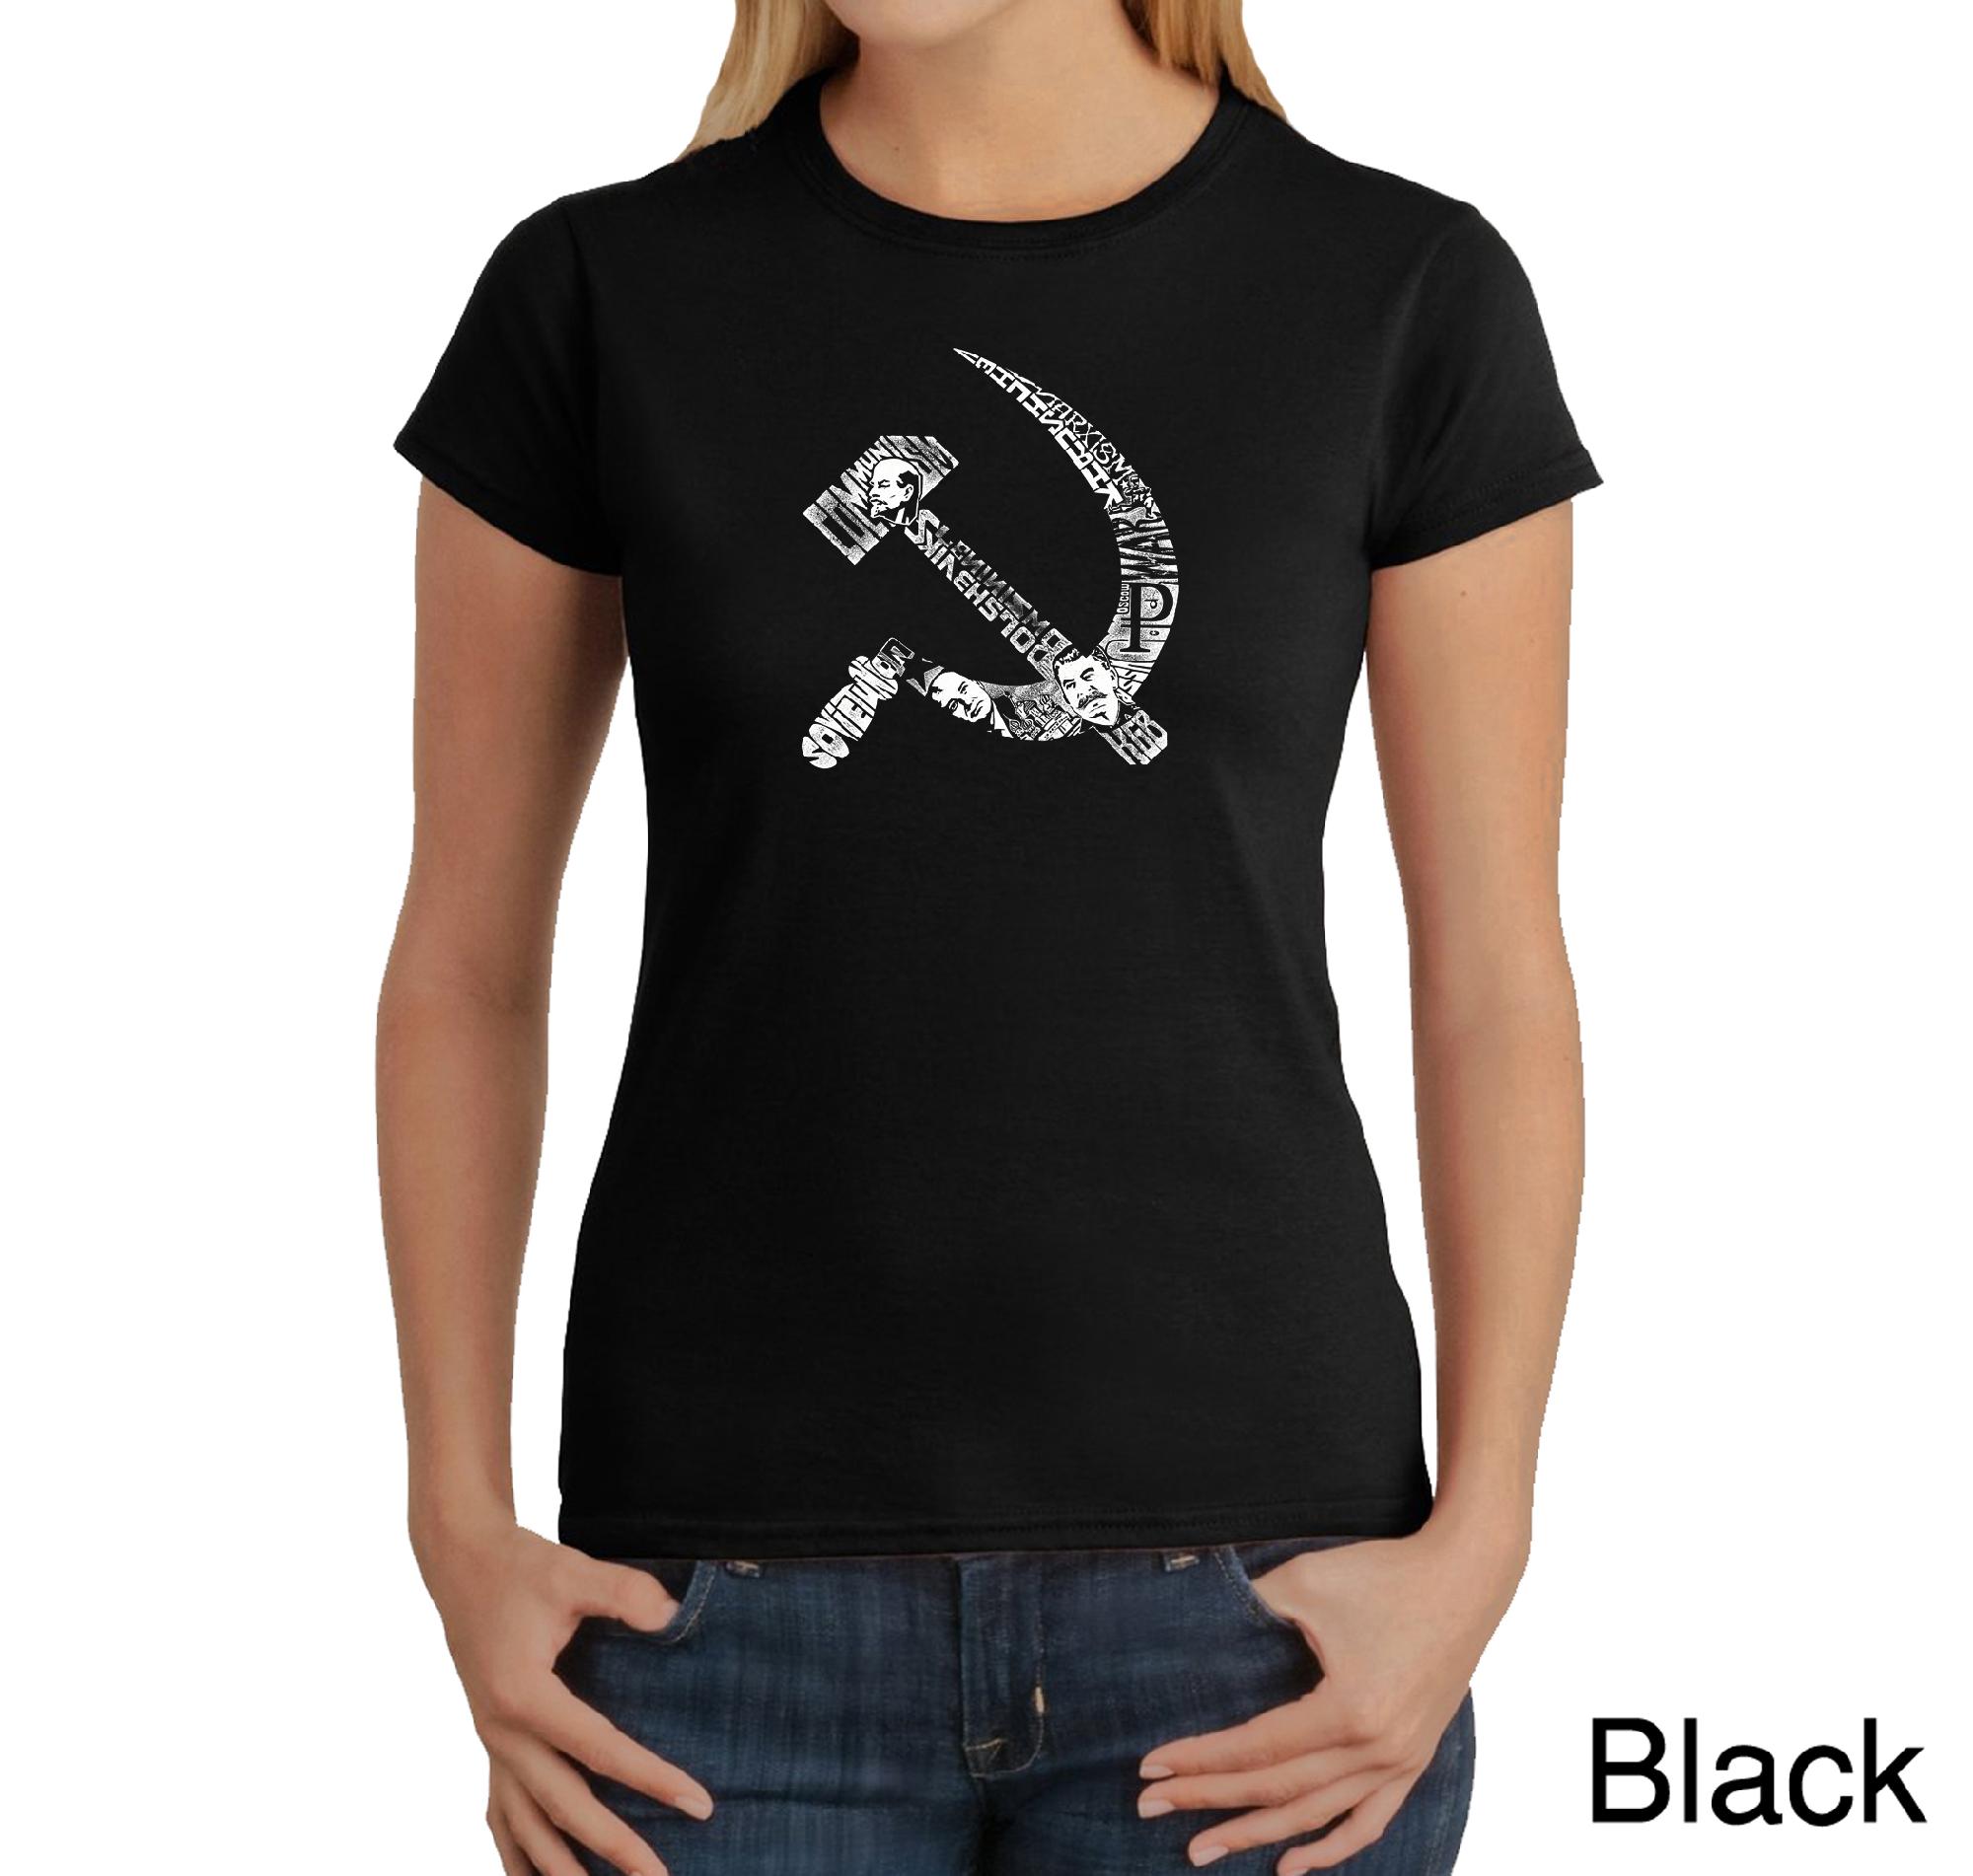 Los Angeles Pop Art Women's Word Art T-shirt - Soviet Hammer and Sickle